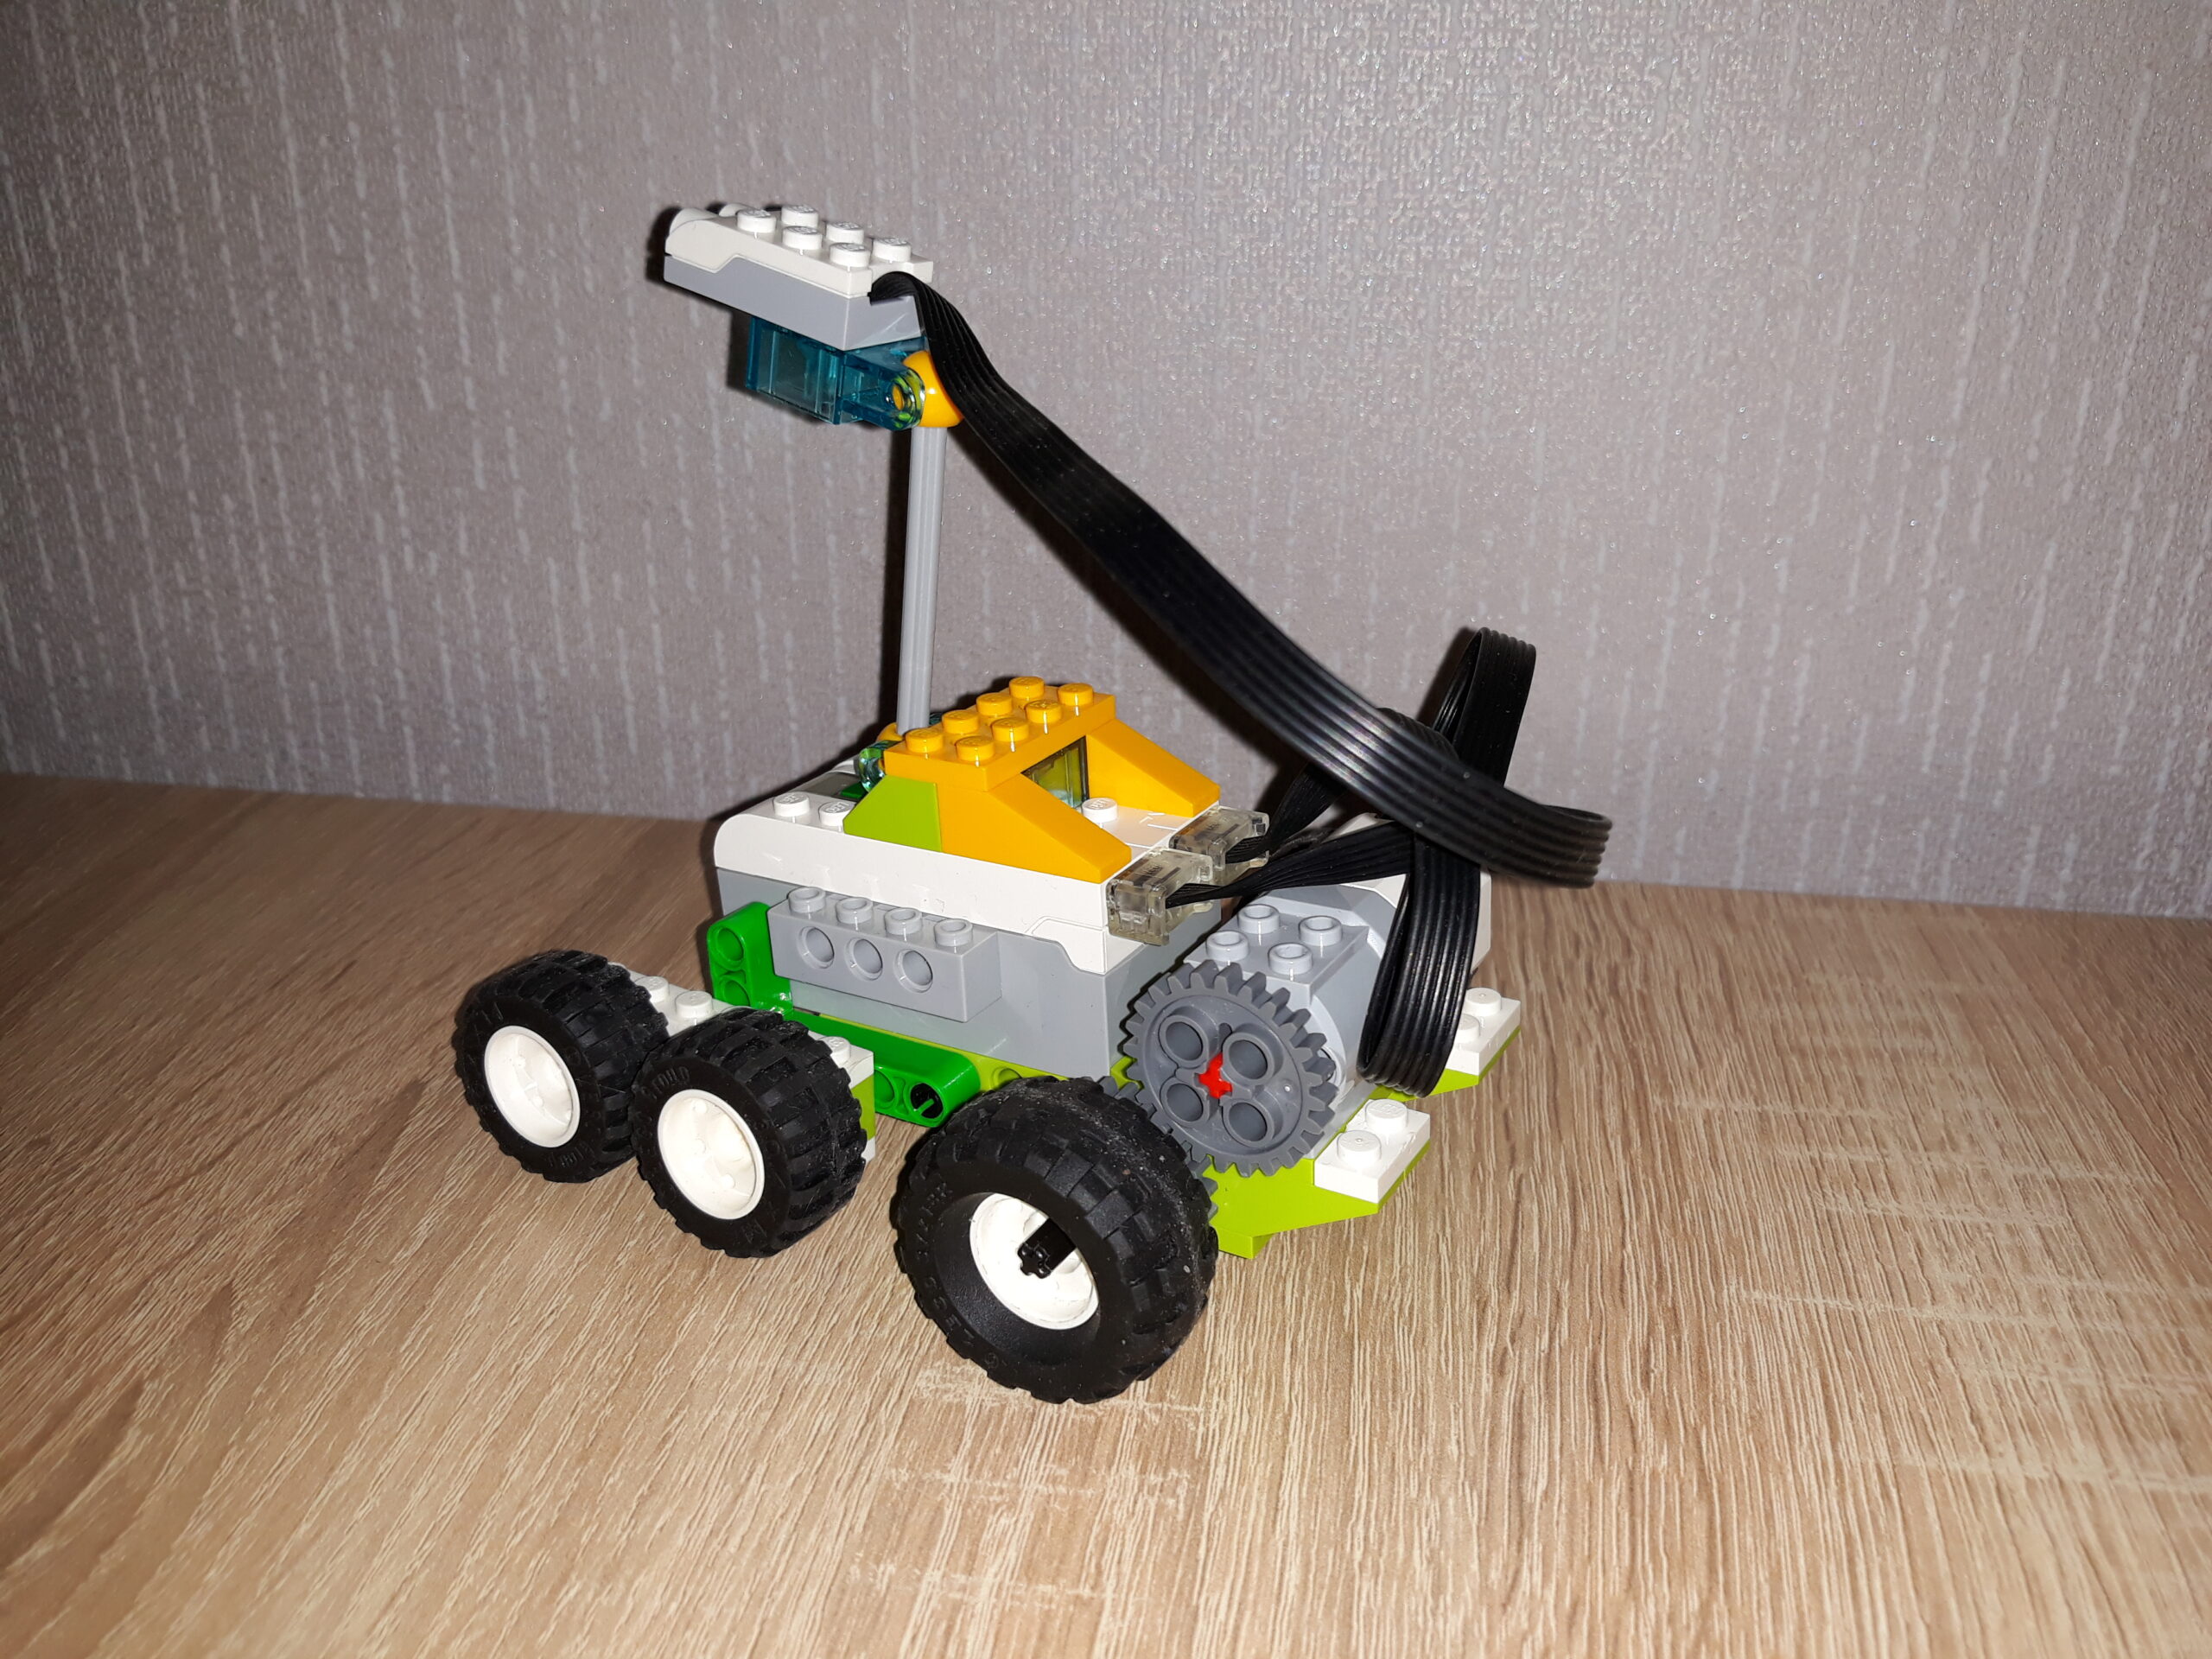 Итог инструкция по сборке из набора LEGO Education WeDo 2.0 Марсоход